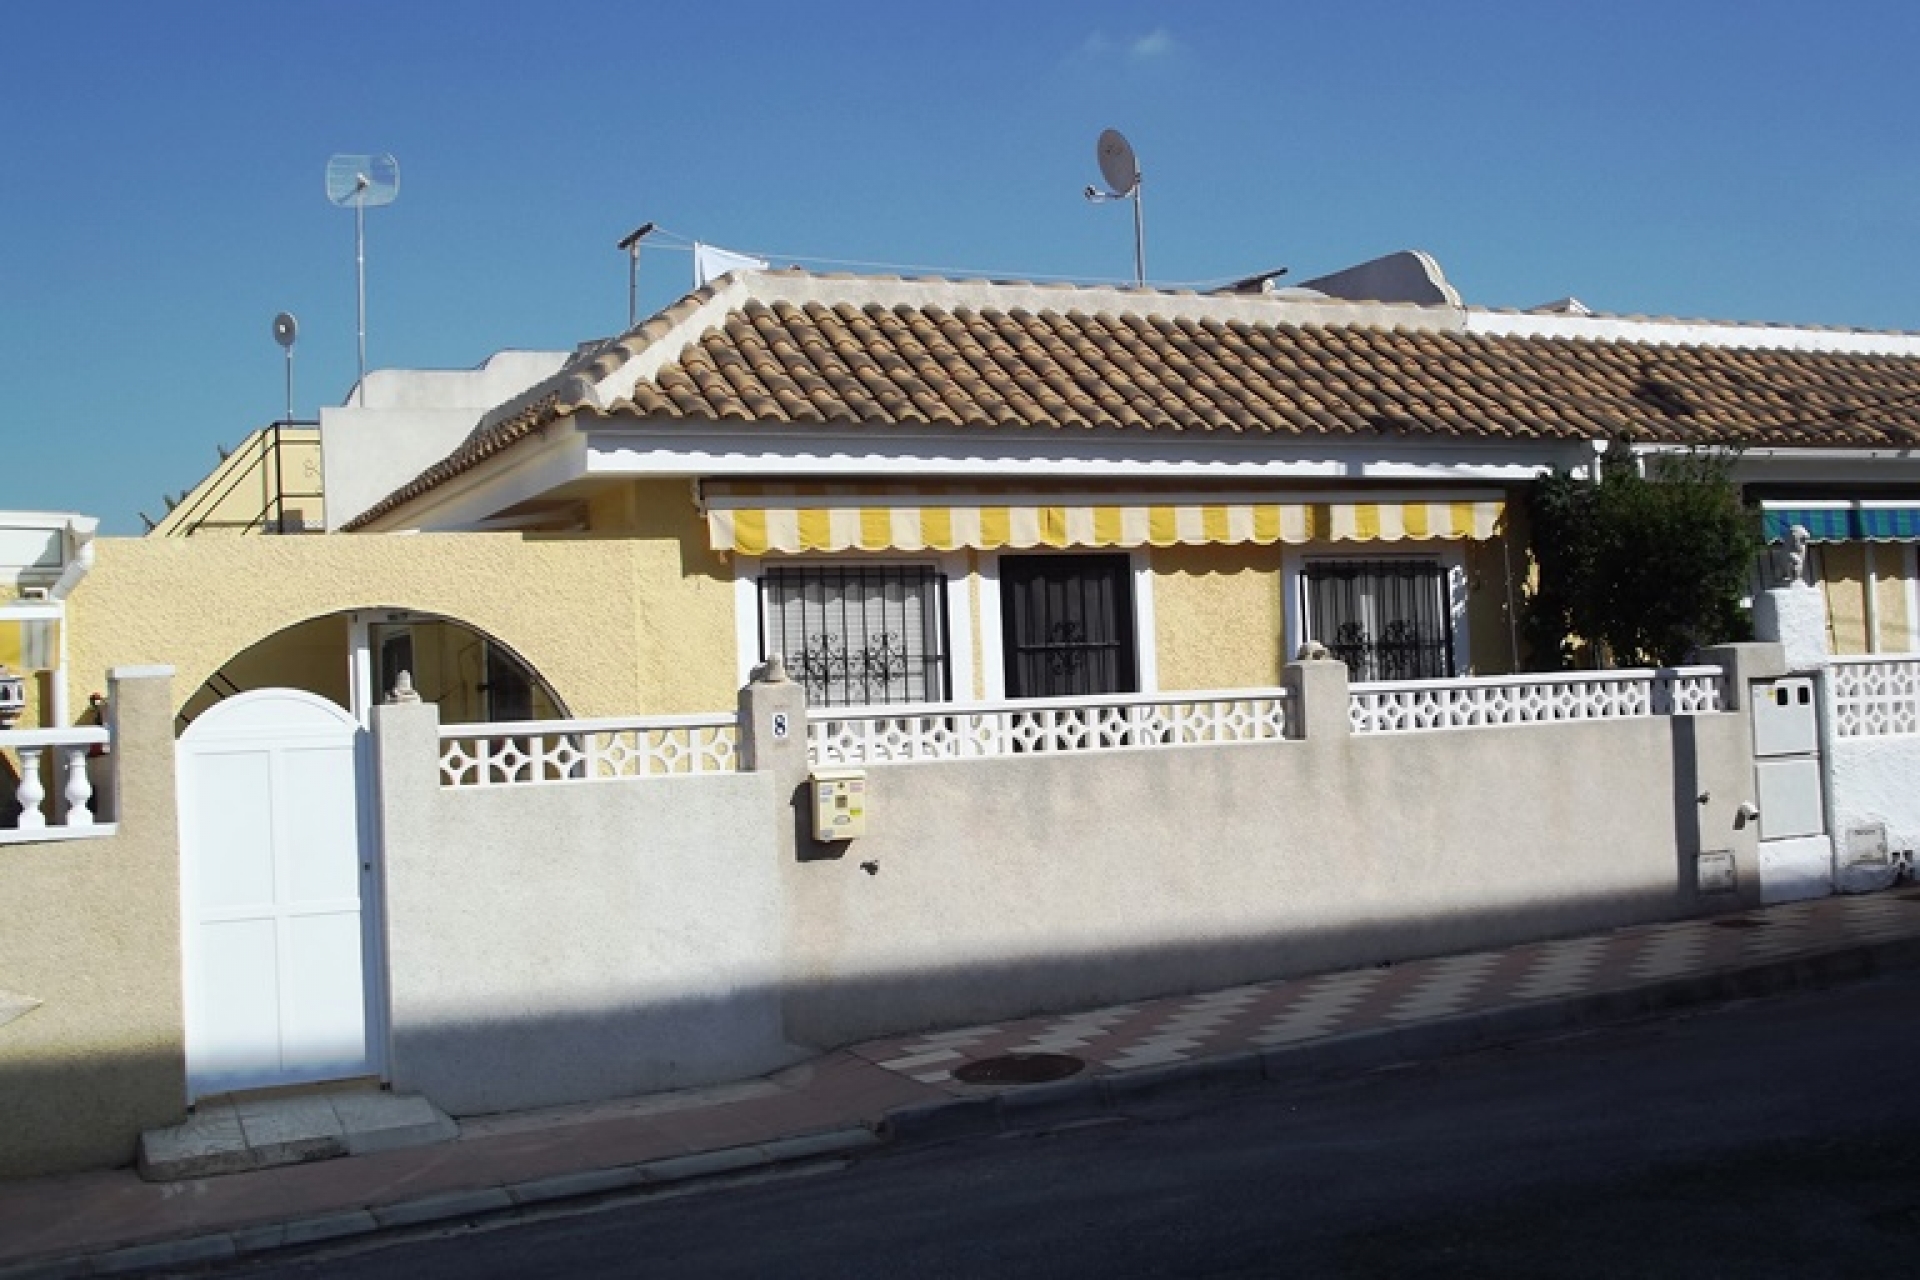 San Luis cheap bargain property for sale near Torrevieja